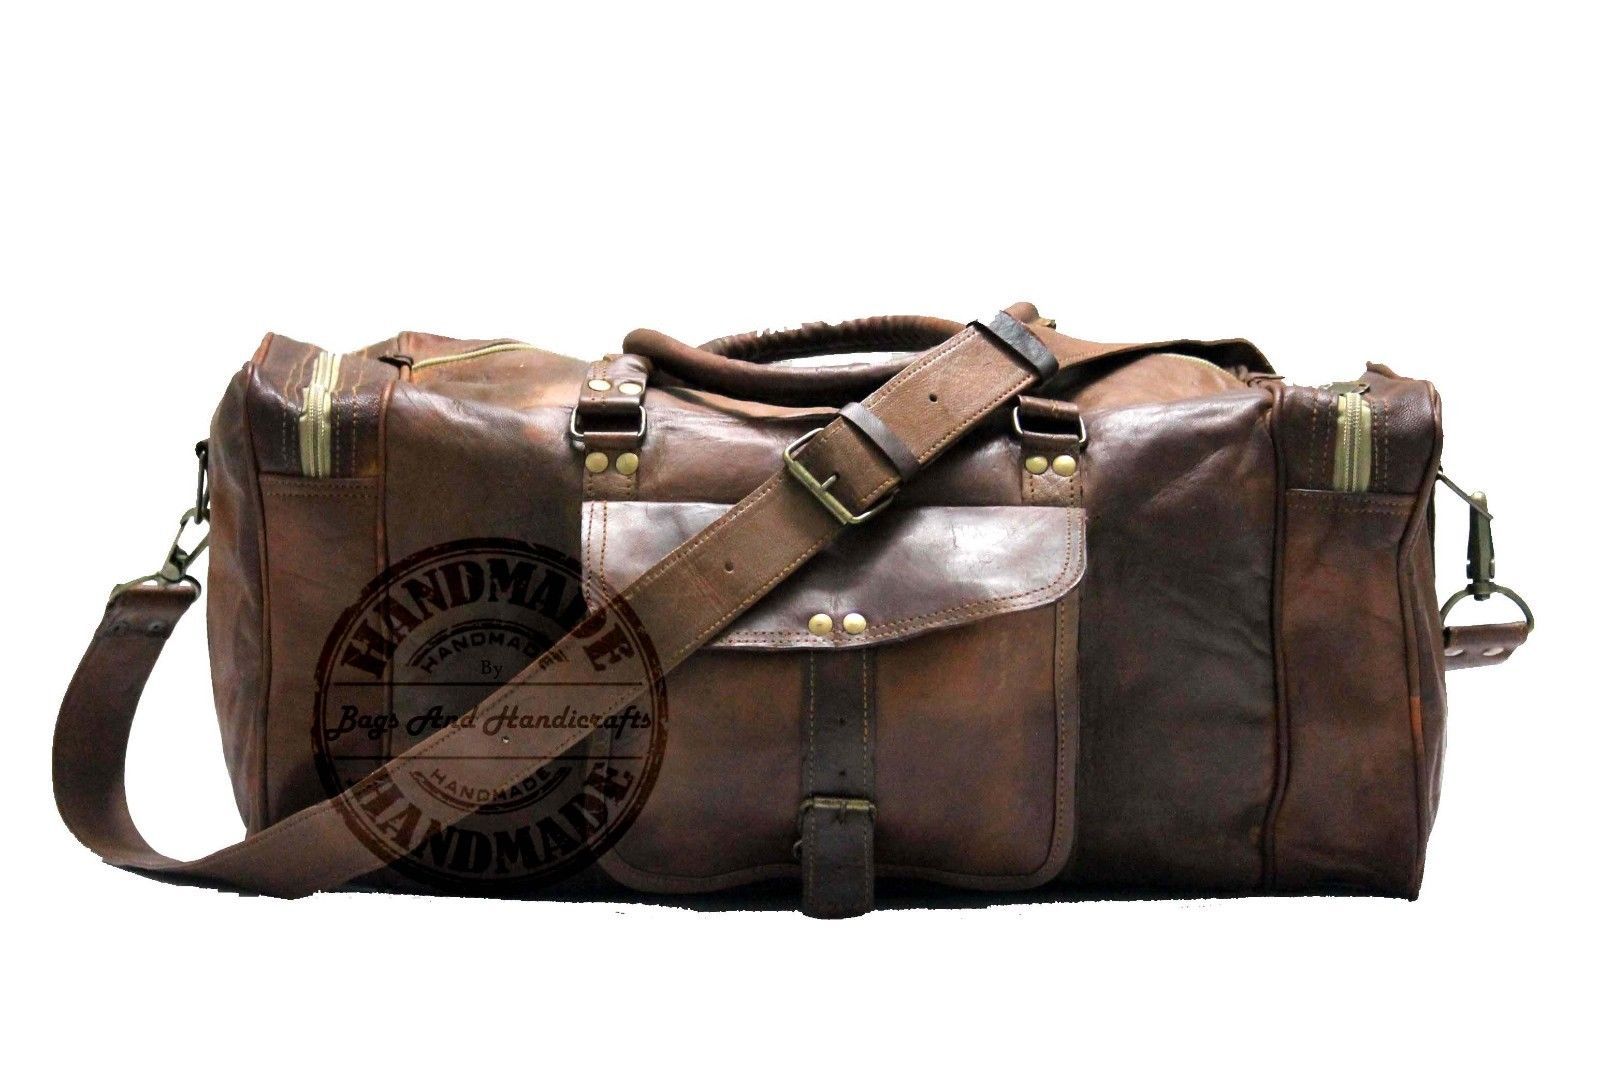 Best Travel Duffel Bags Luggage | semashow.com